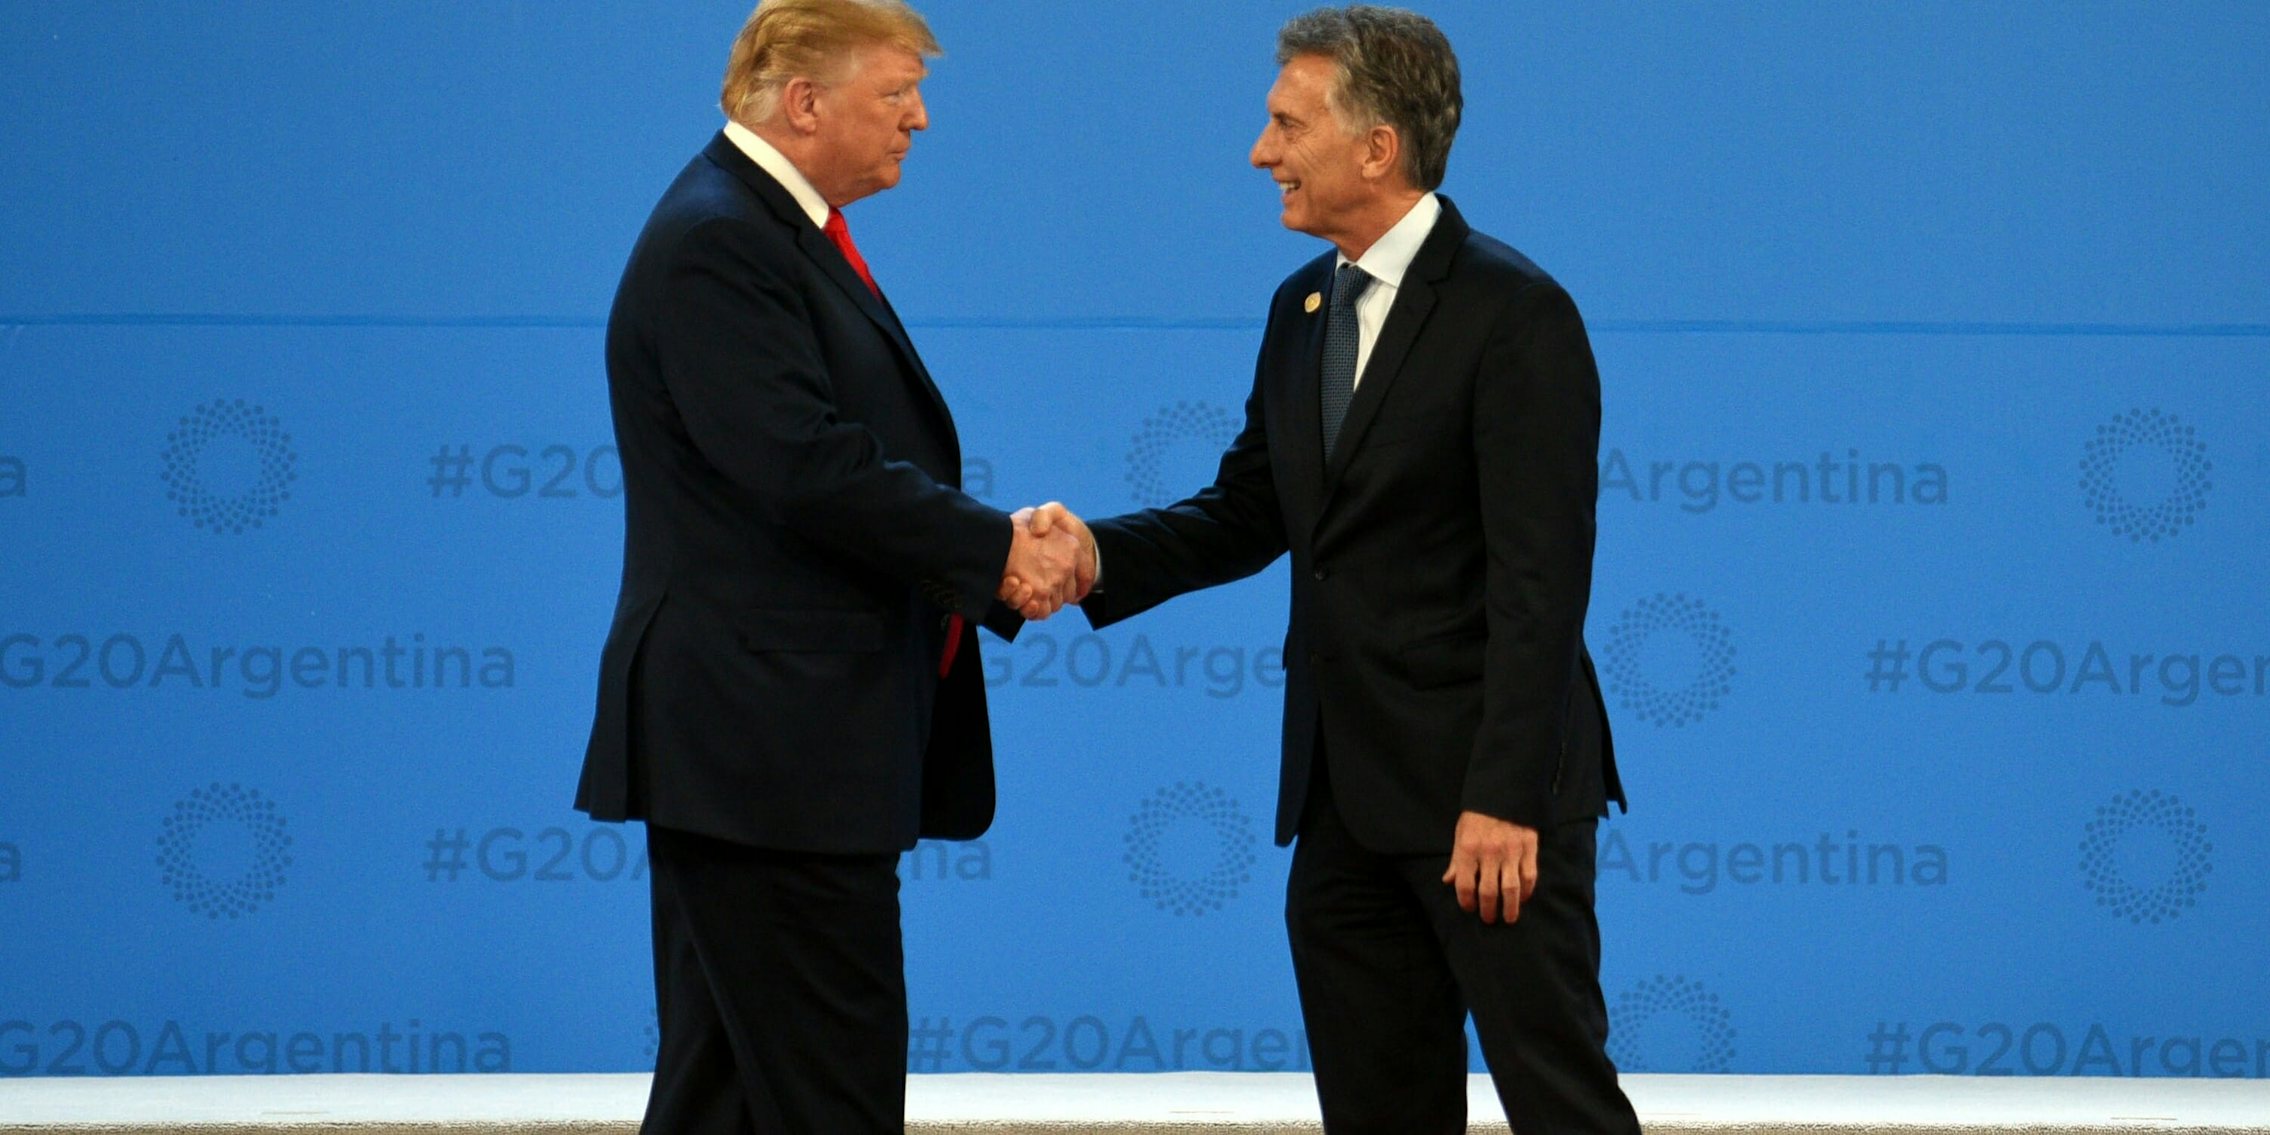 Donald Trump had an awkward time at Argentina's G20 summit.